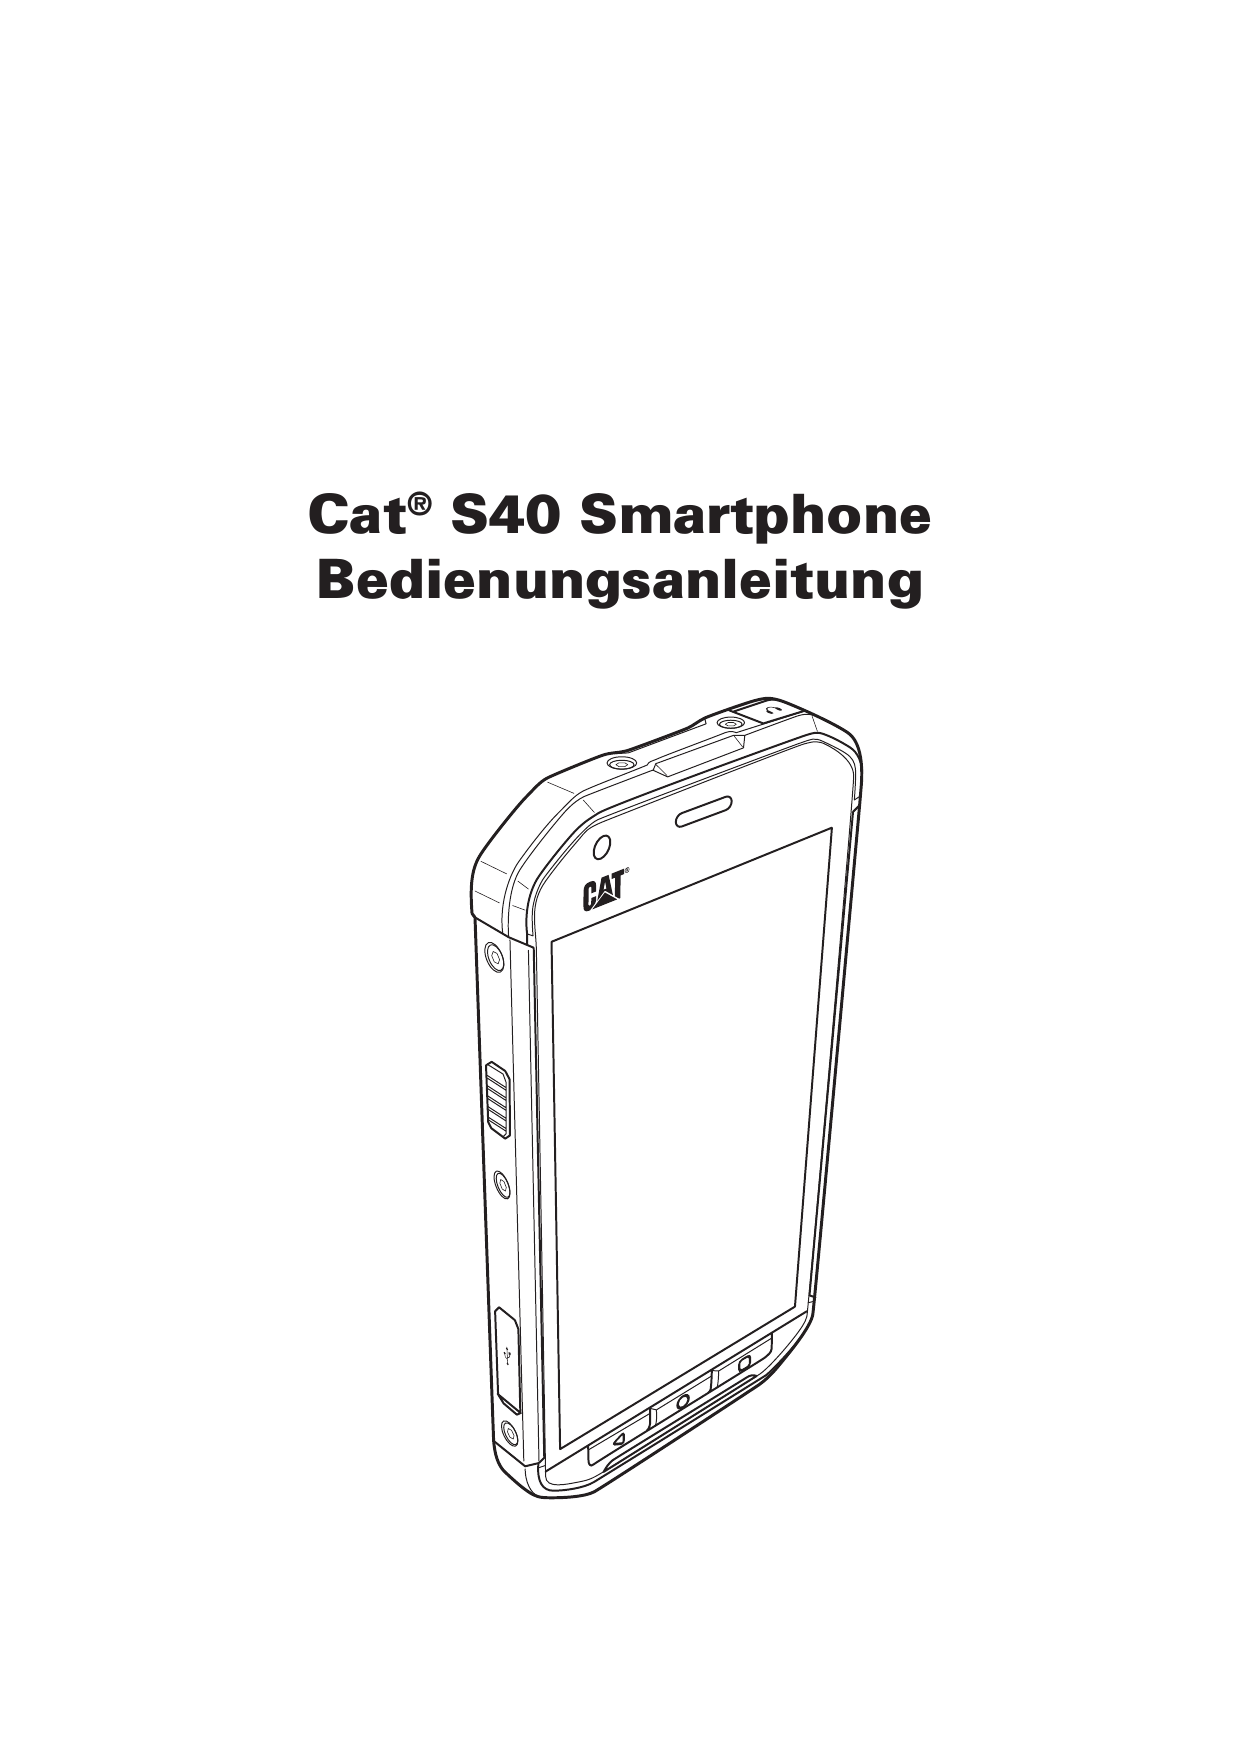 Cat® S40 SmartphoneBedienungsanleitung